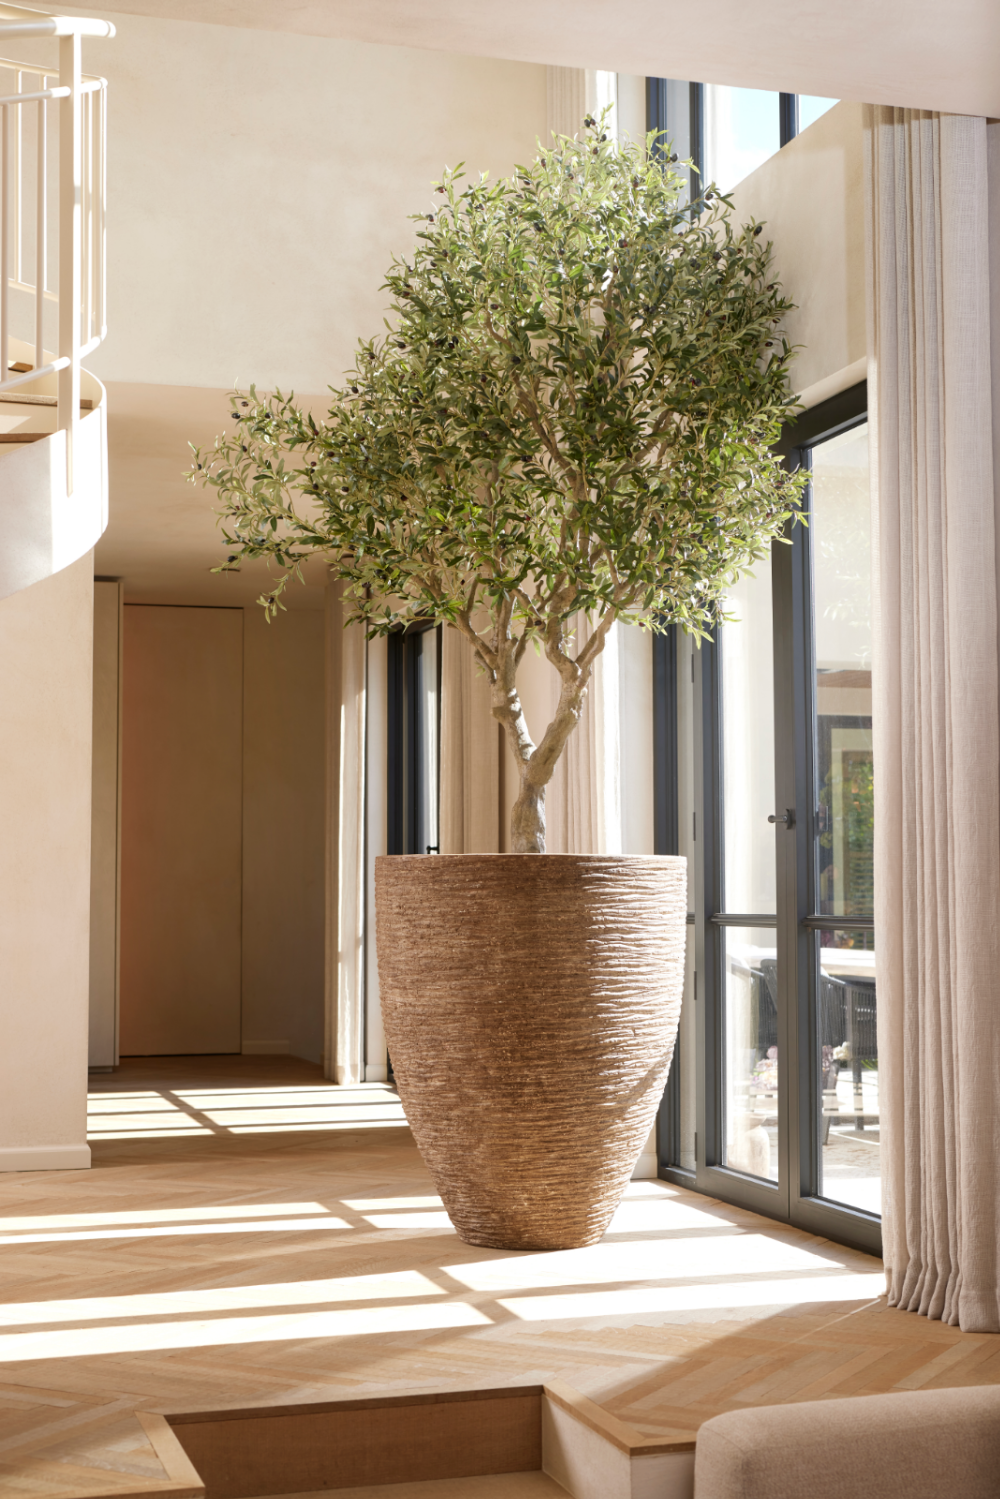 Orren Ellis 48 Artificial Olive Tree in Planter & Reviews